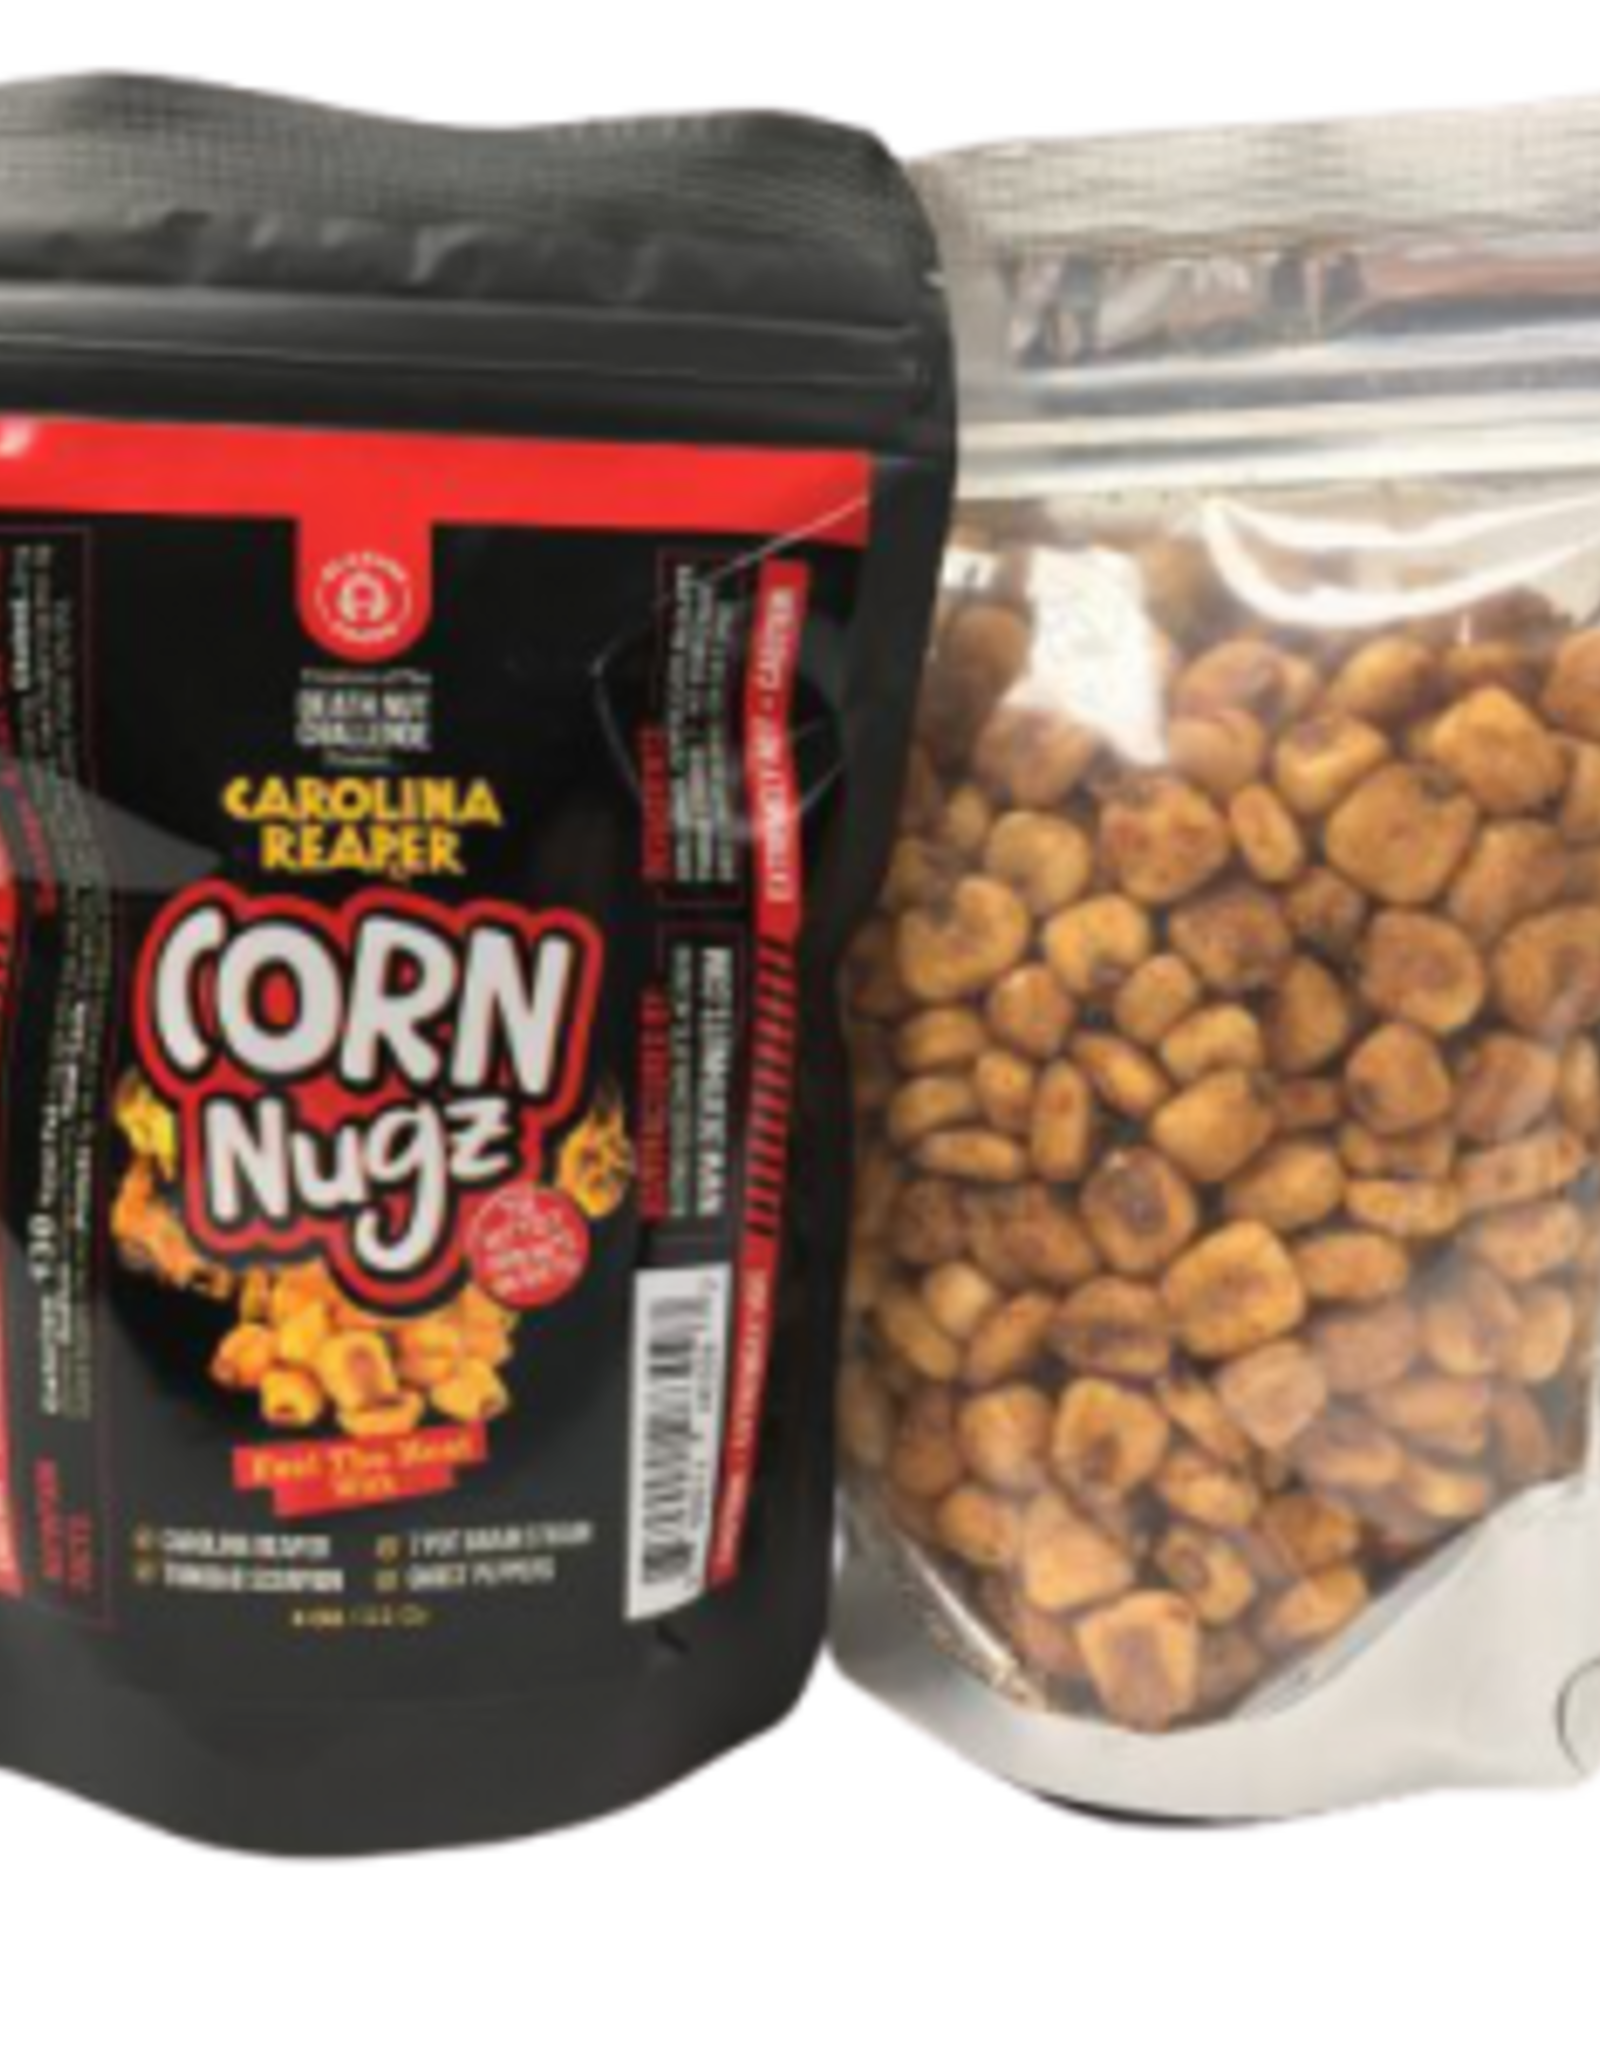 Blazing foods Carolina Reaper Corn Nugz Bag 4oz